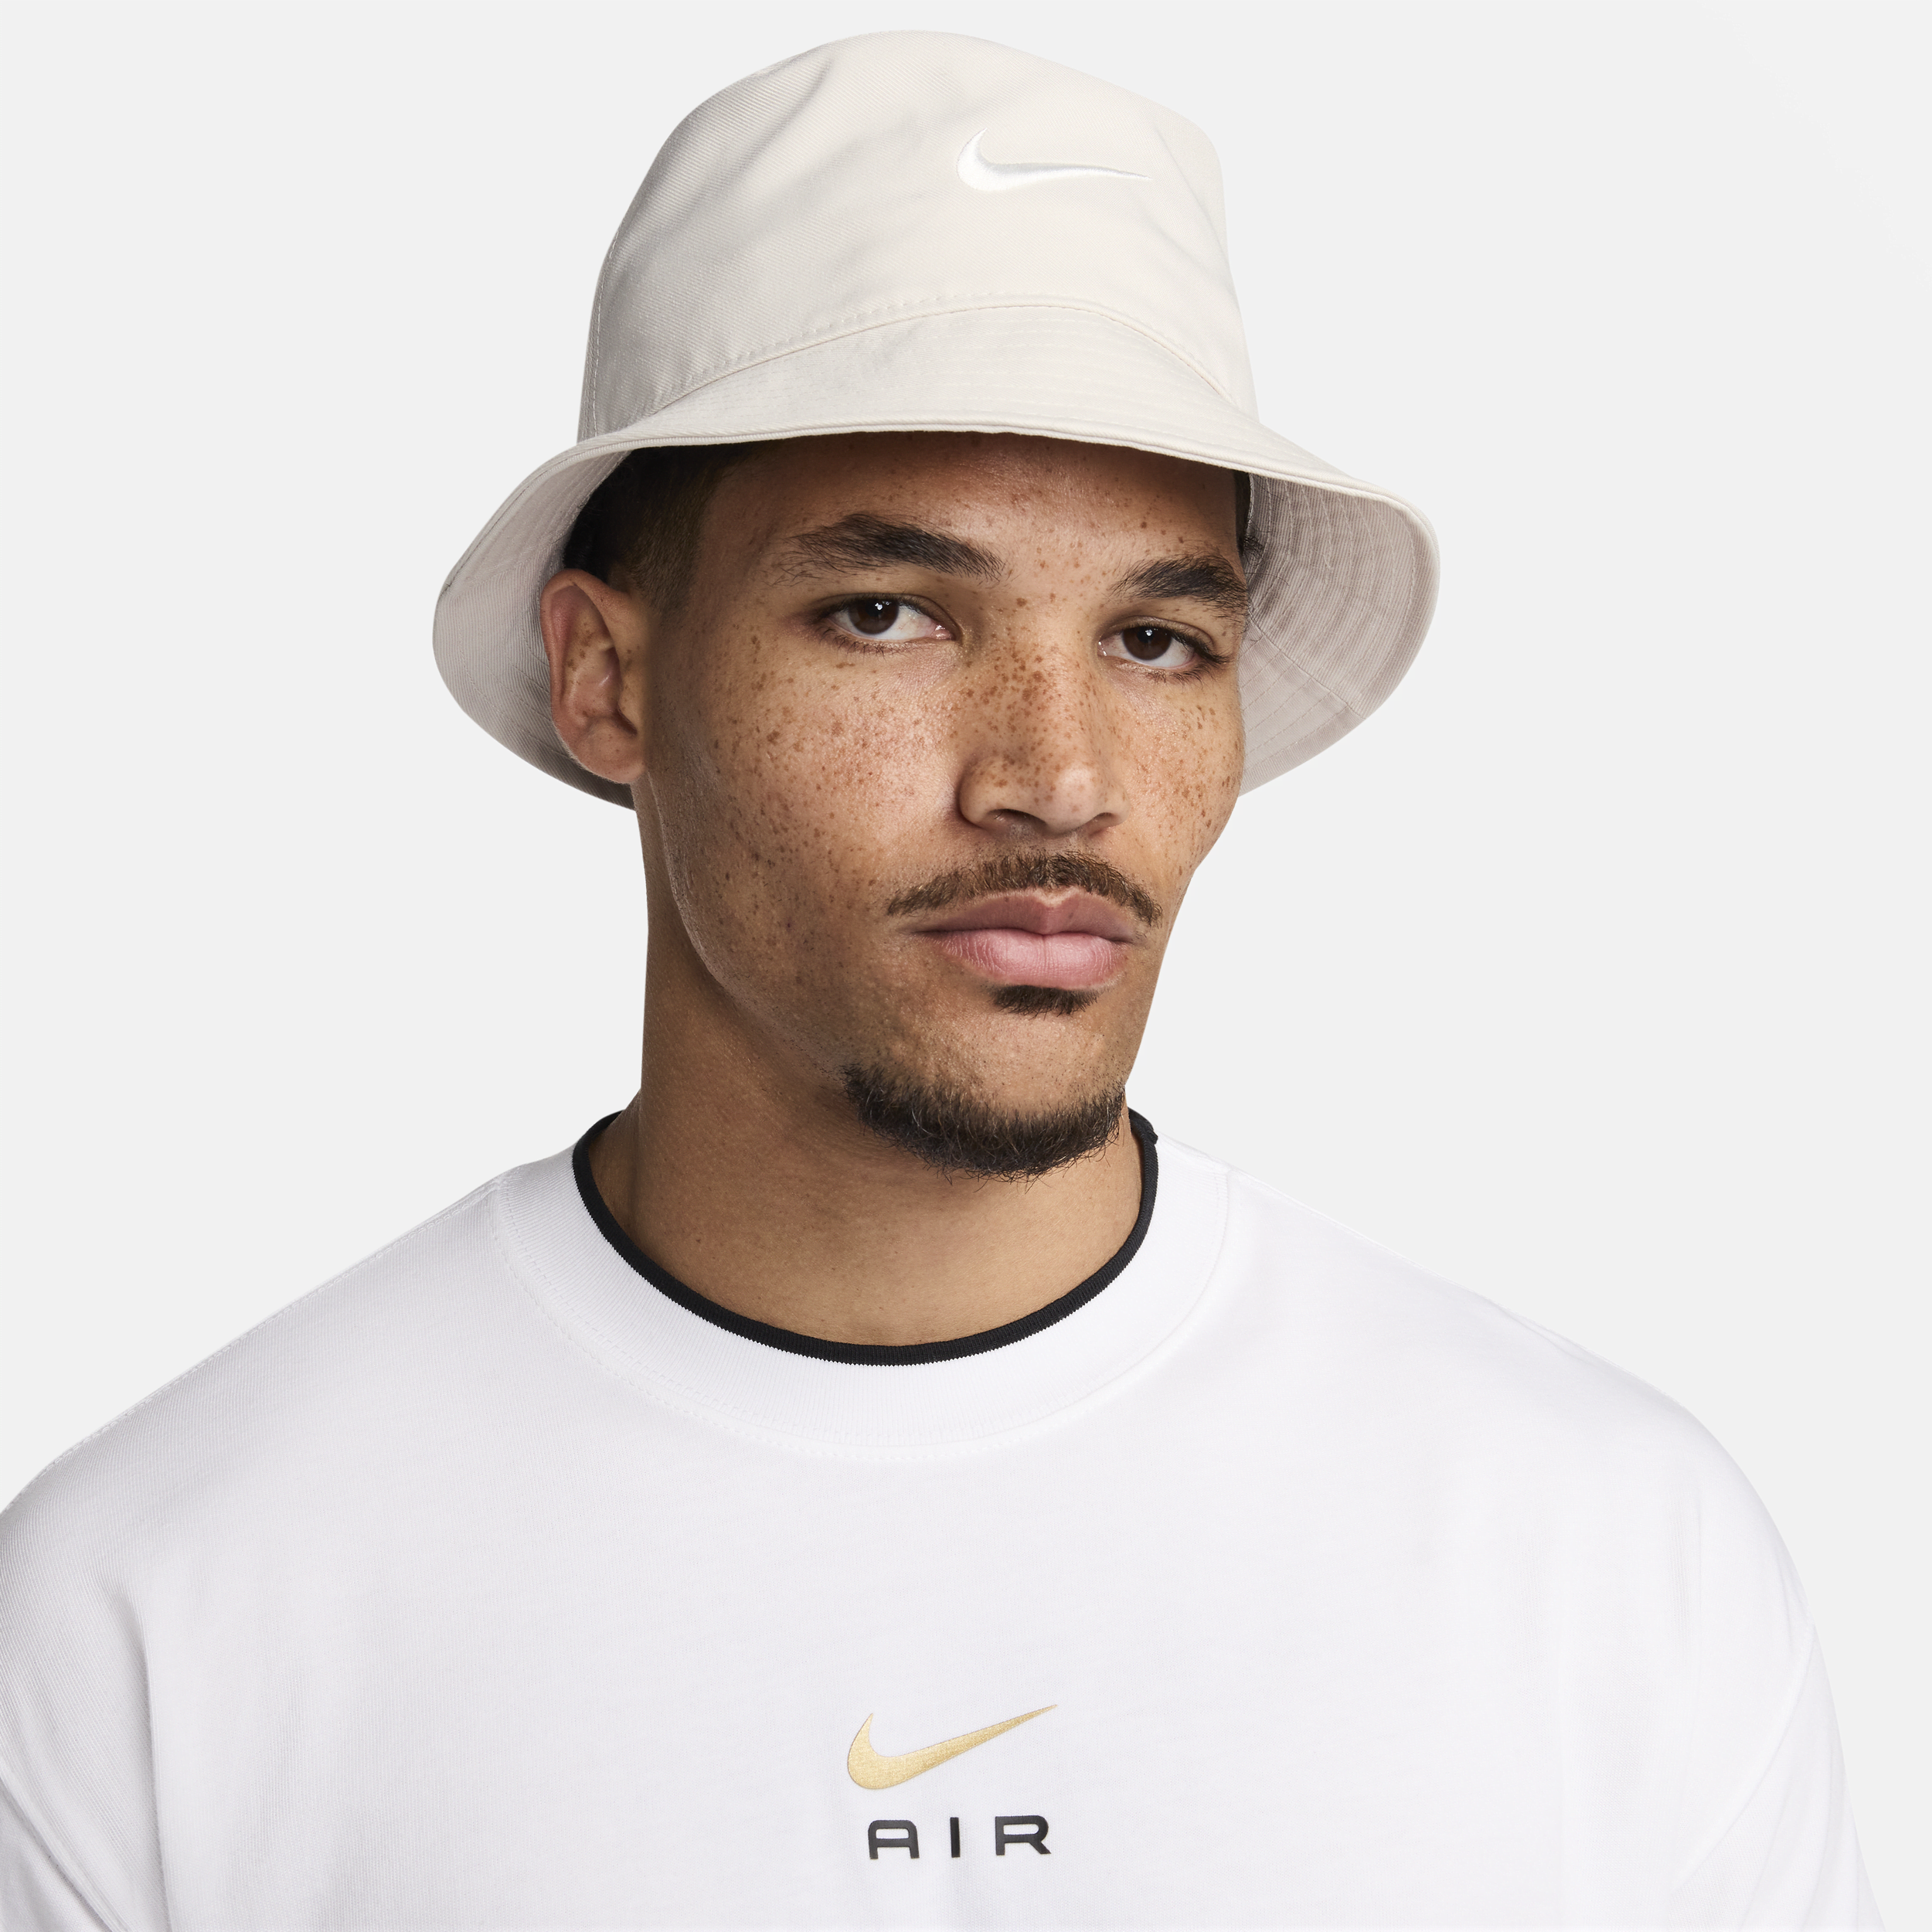 Shop Nike Unisex Apex Swoosh Bucket Hat In Brown